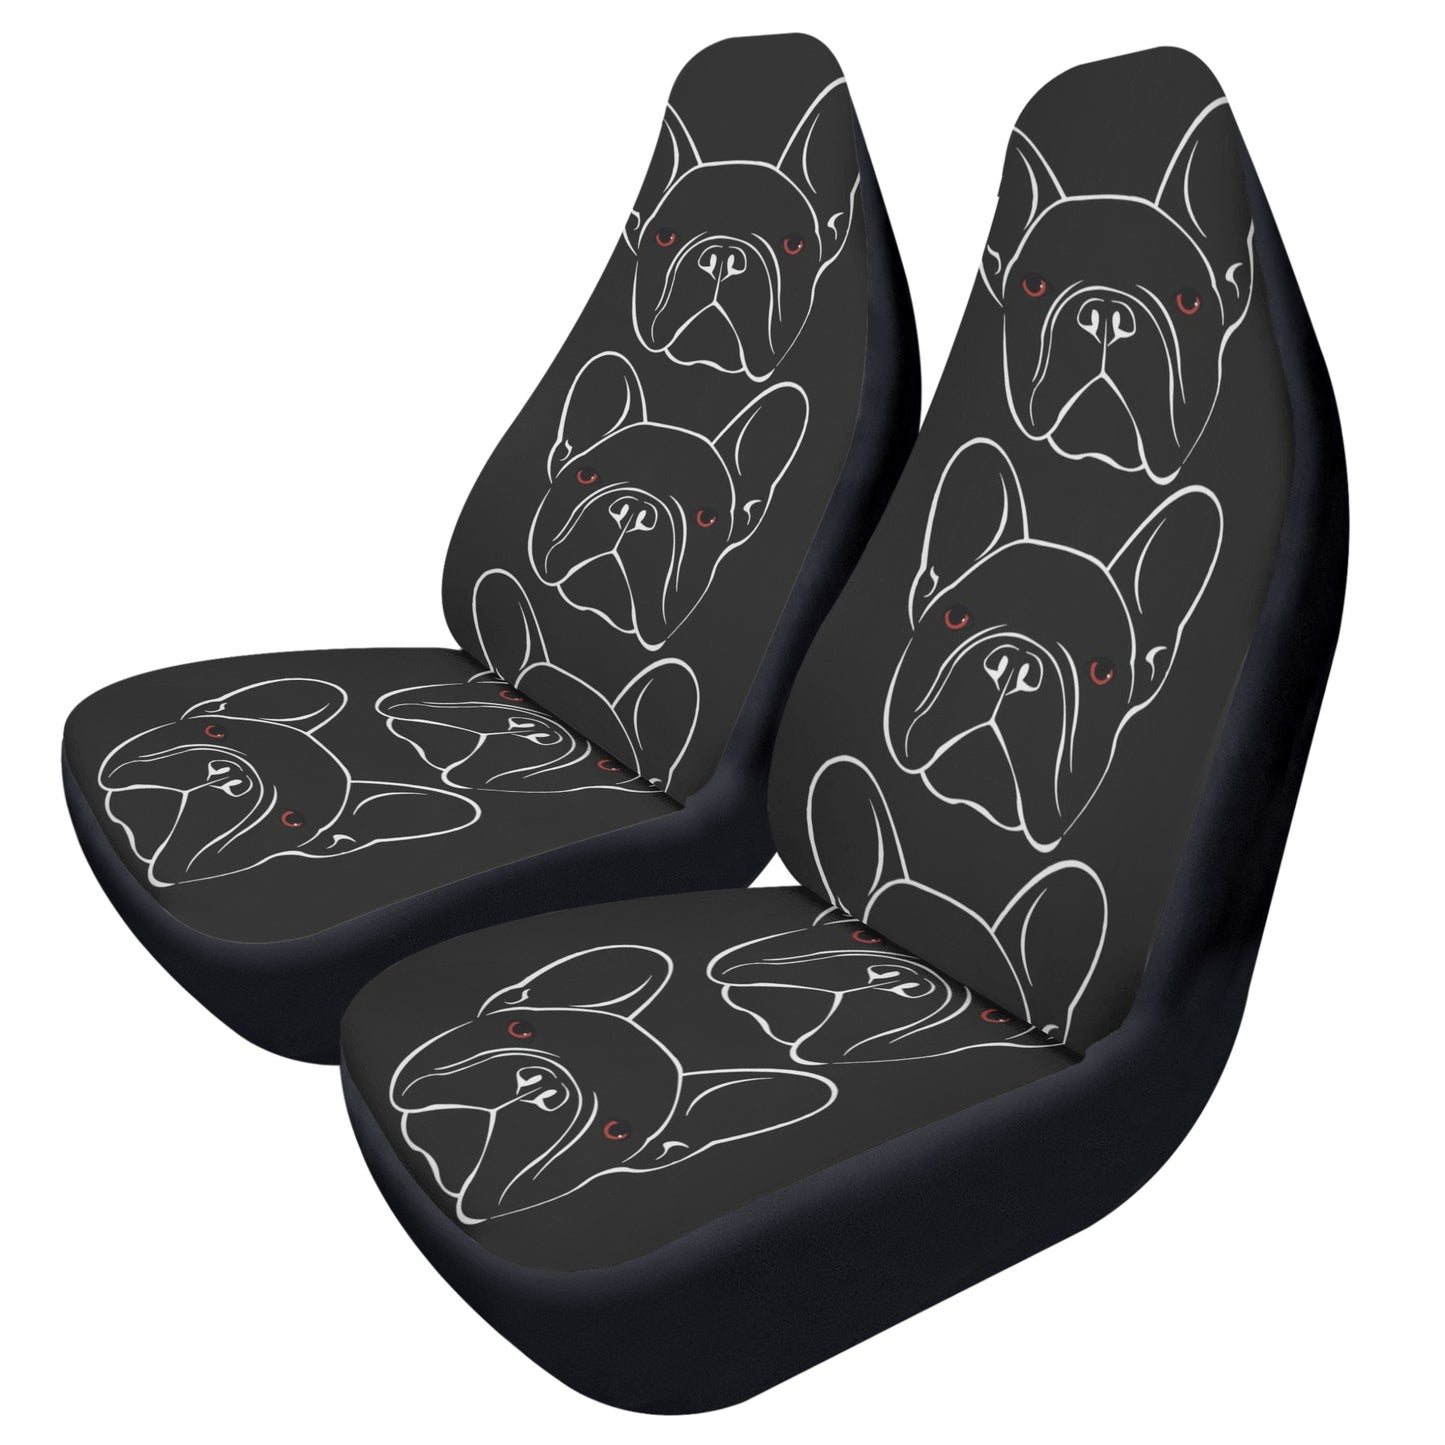 Aimee - Car seat covers (2 pcs)